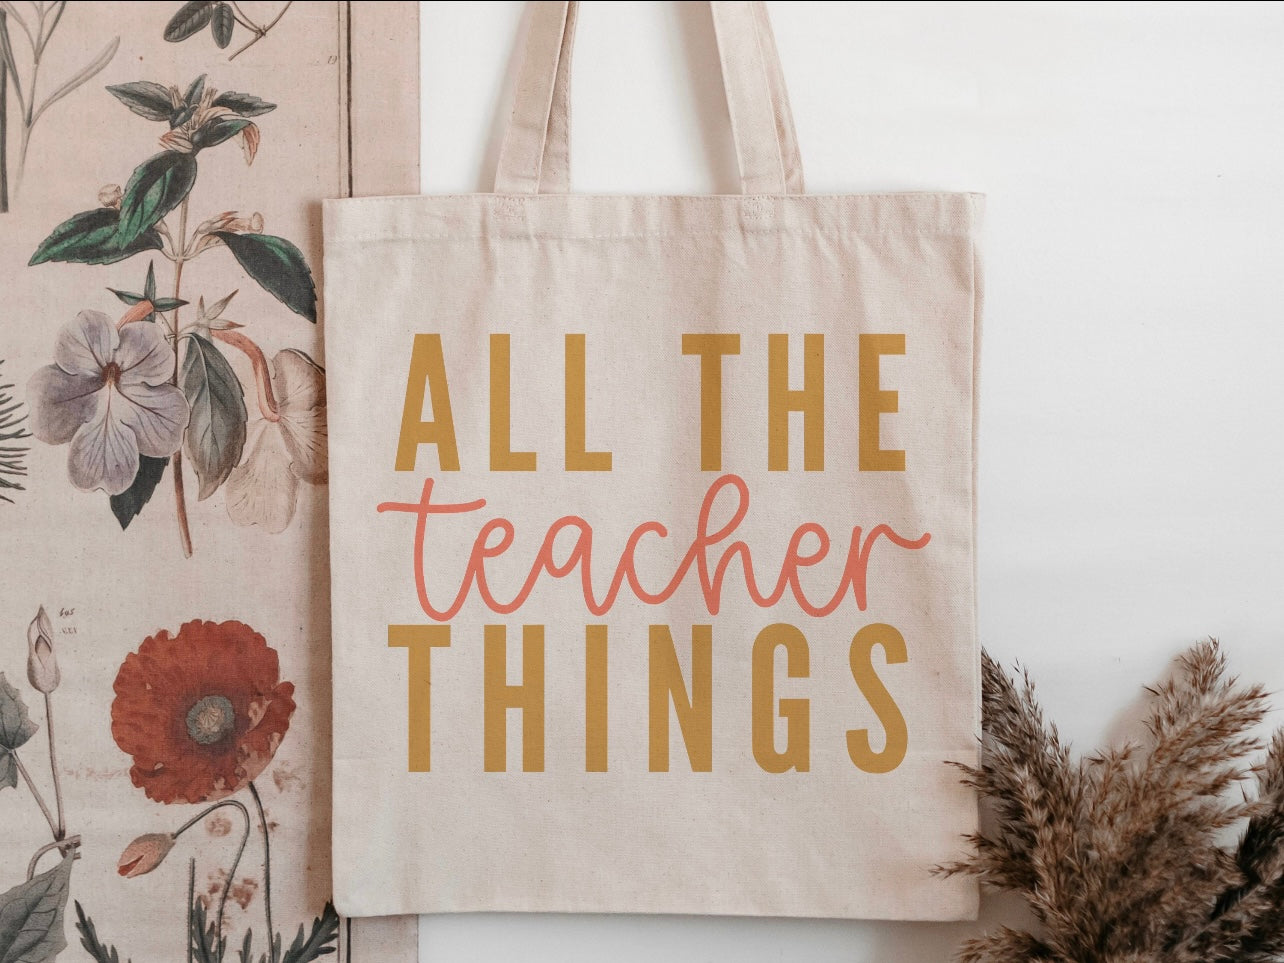 Teacher tote bags